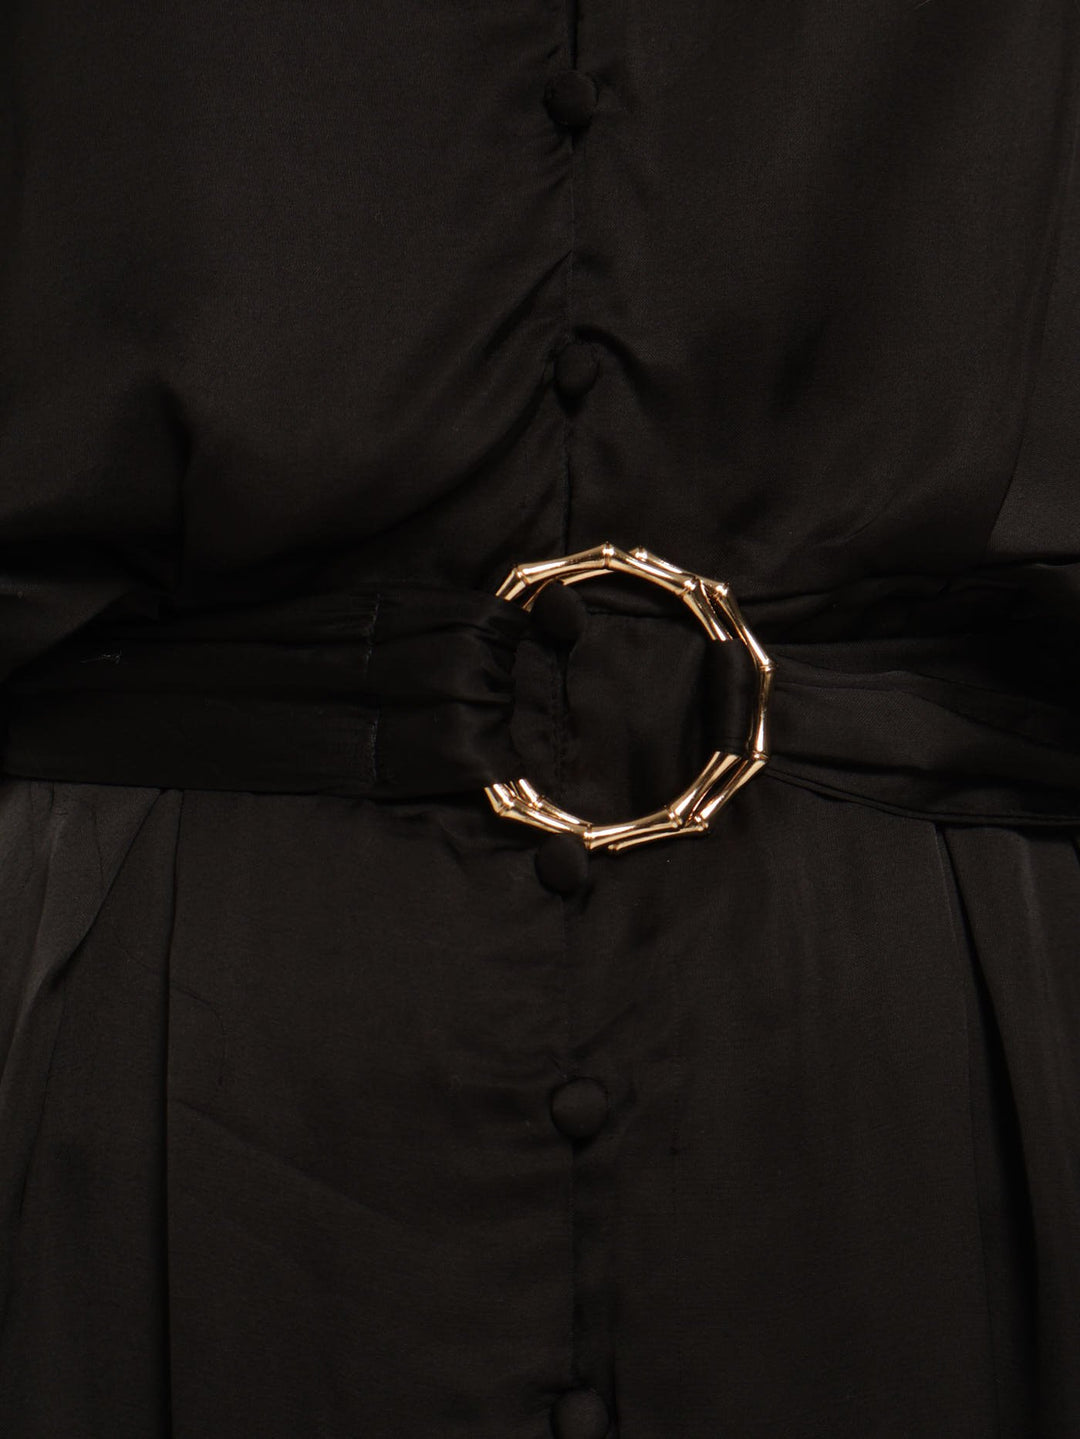 Long Sleeve Satin Dress - Black